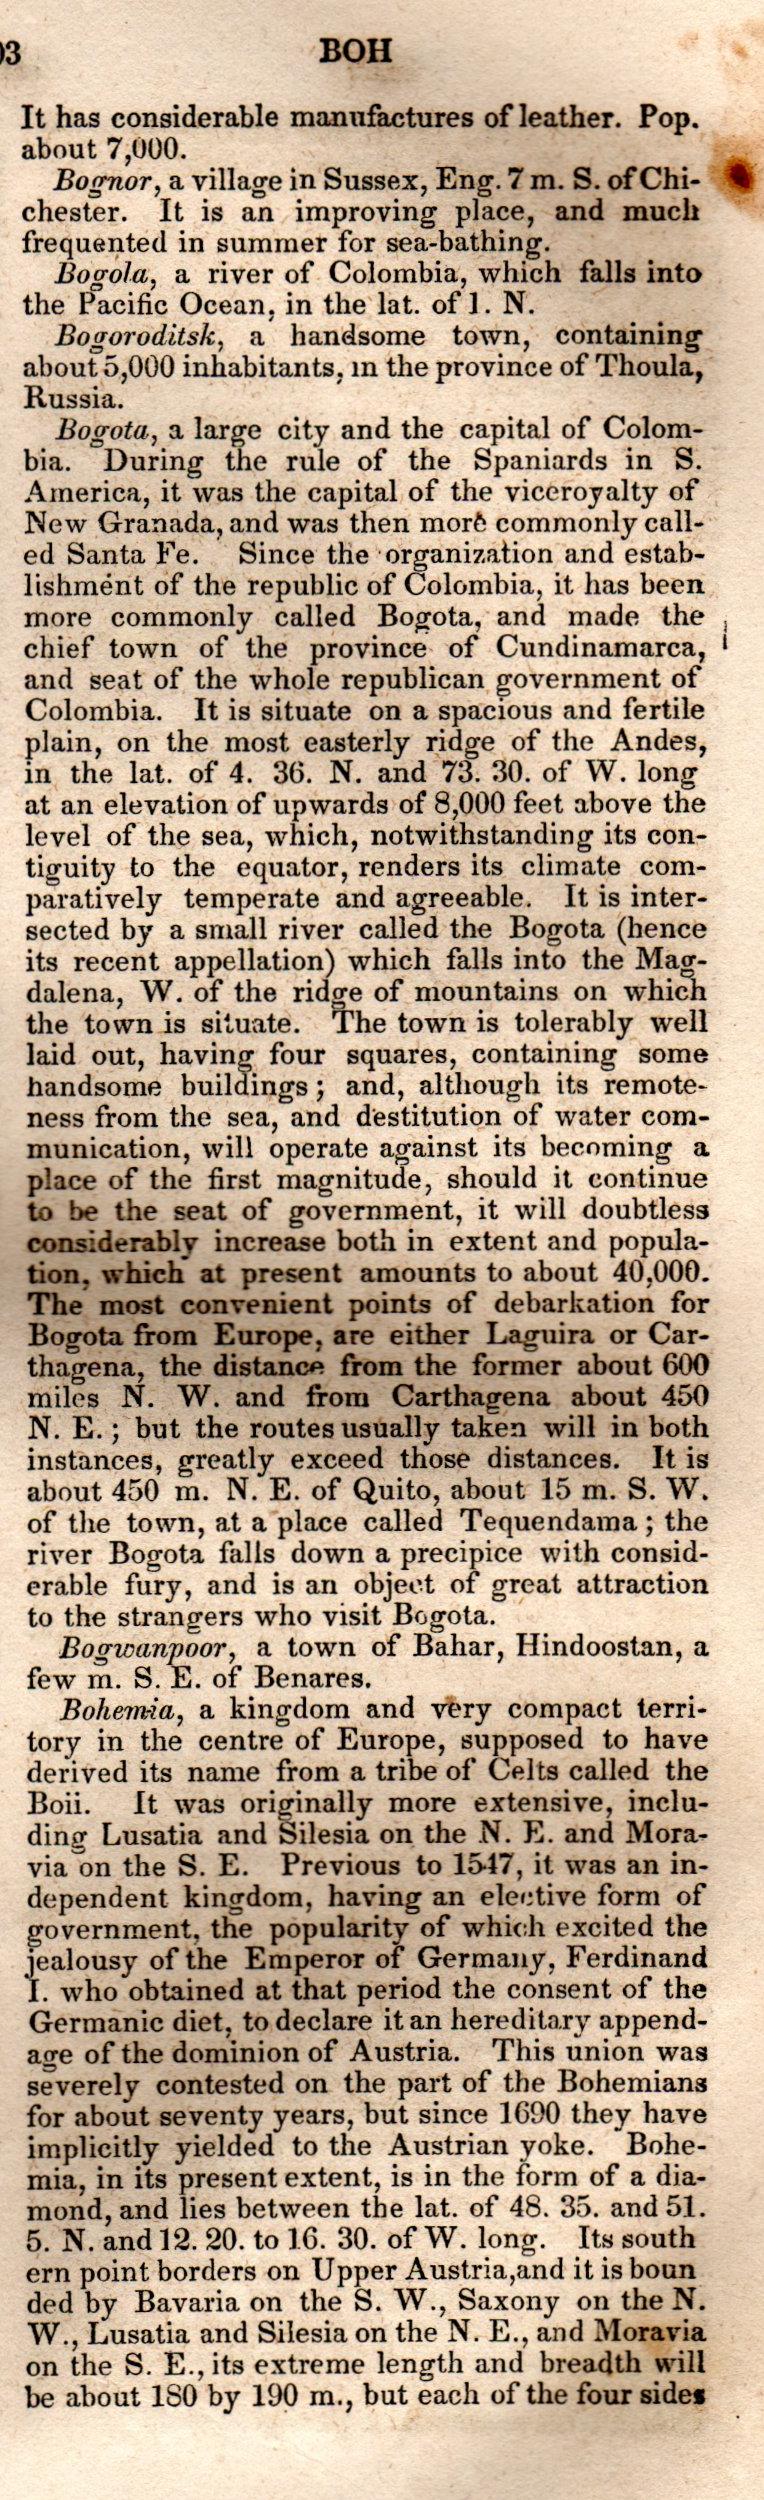 Brookes’ Universal Gazetteer (1850), Page 103 Right Column